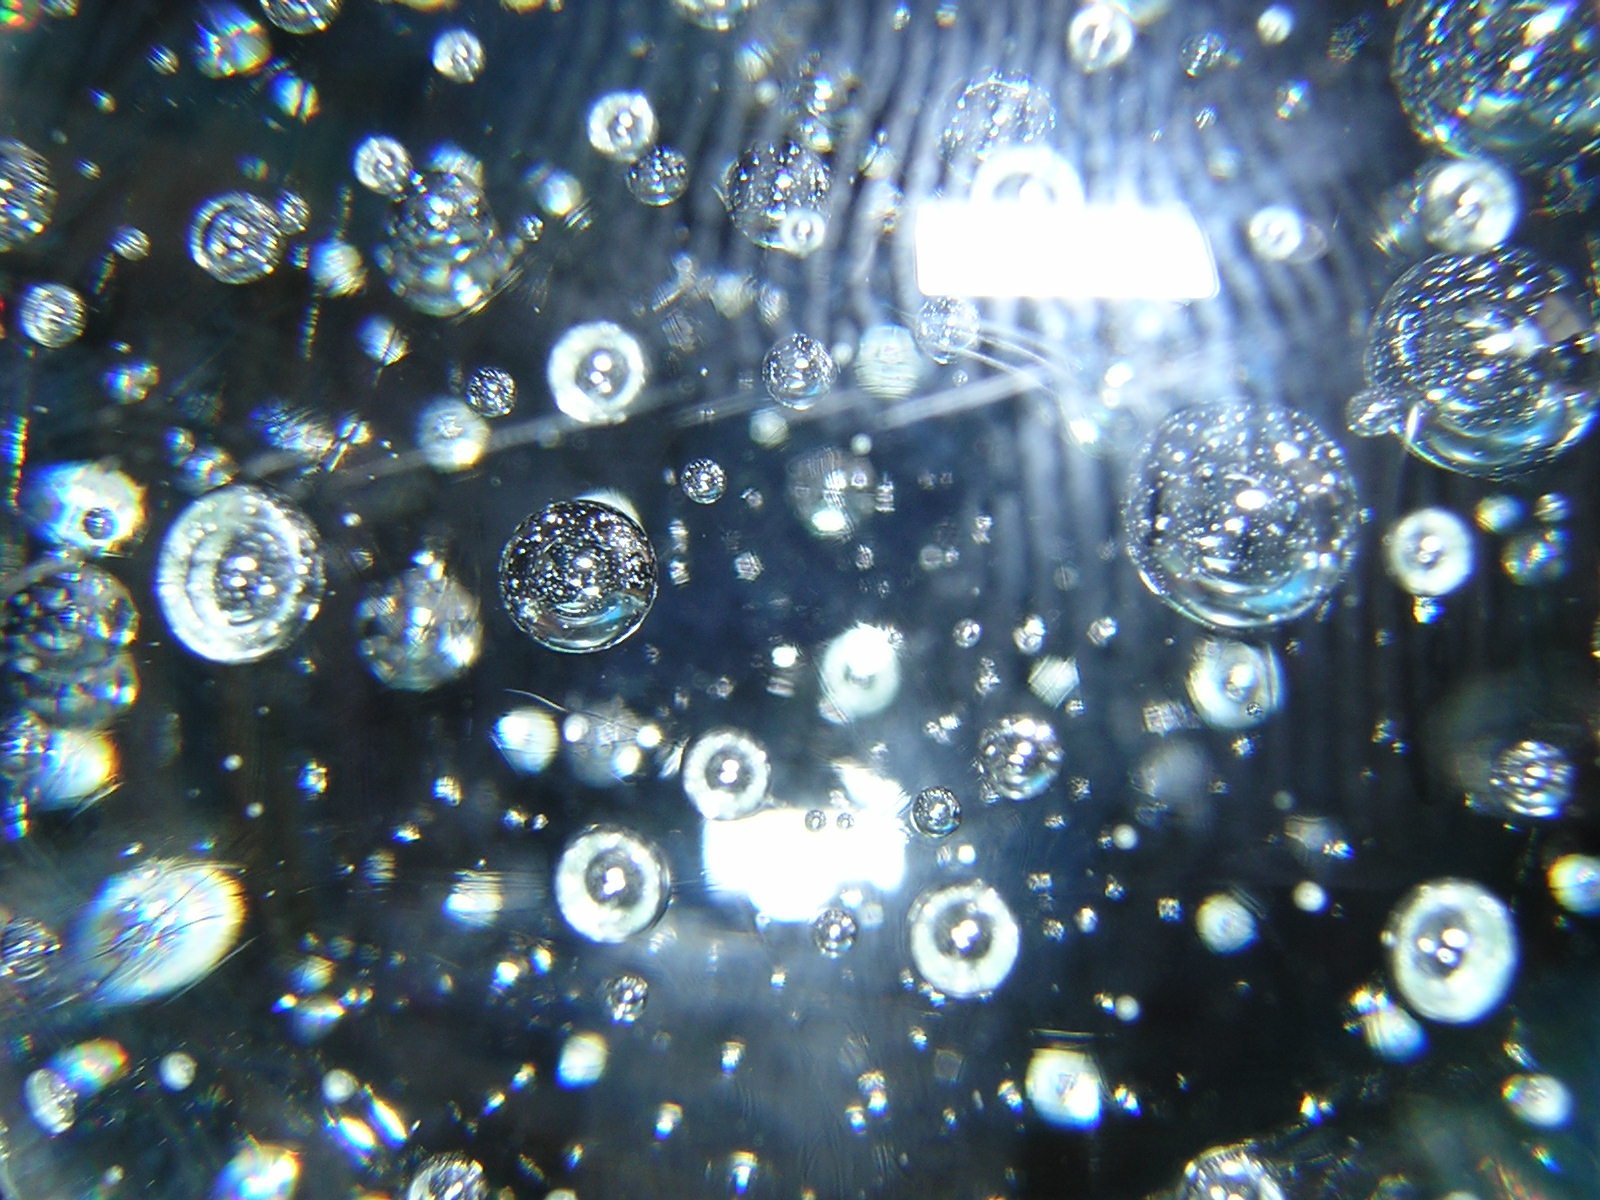 many shiny bubbles floating across a blue surface